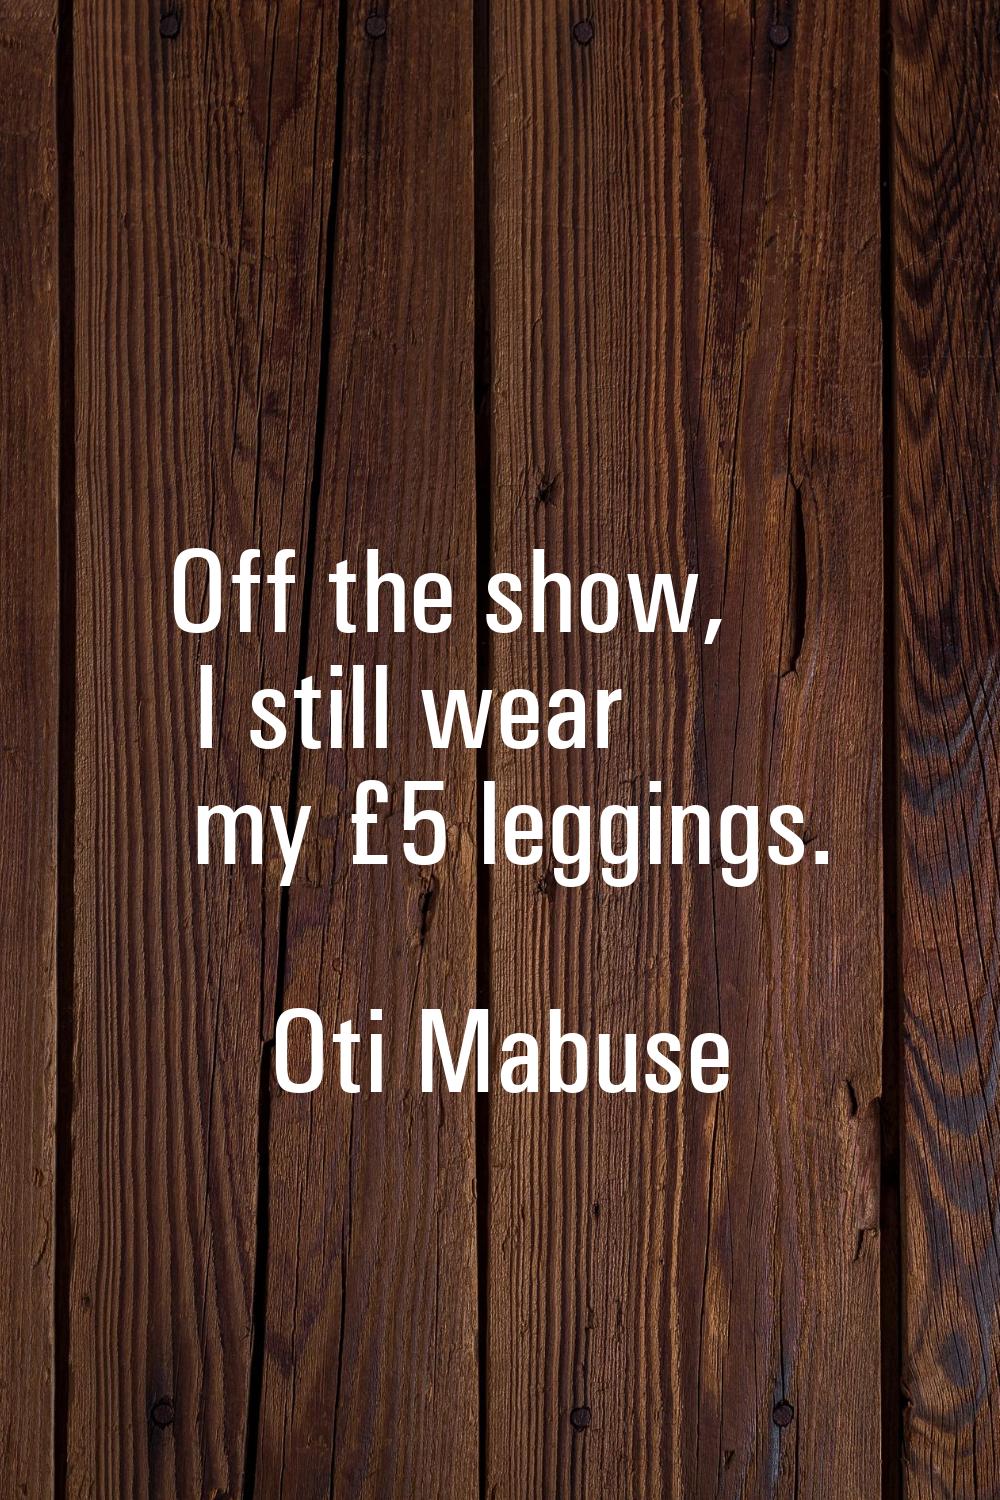 Off the show, I still wear my £5 leggings.